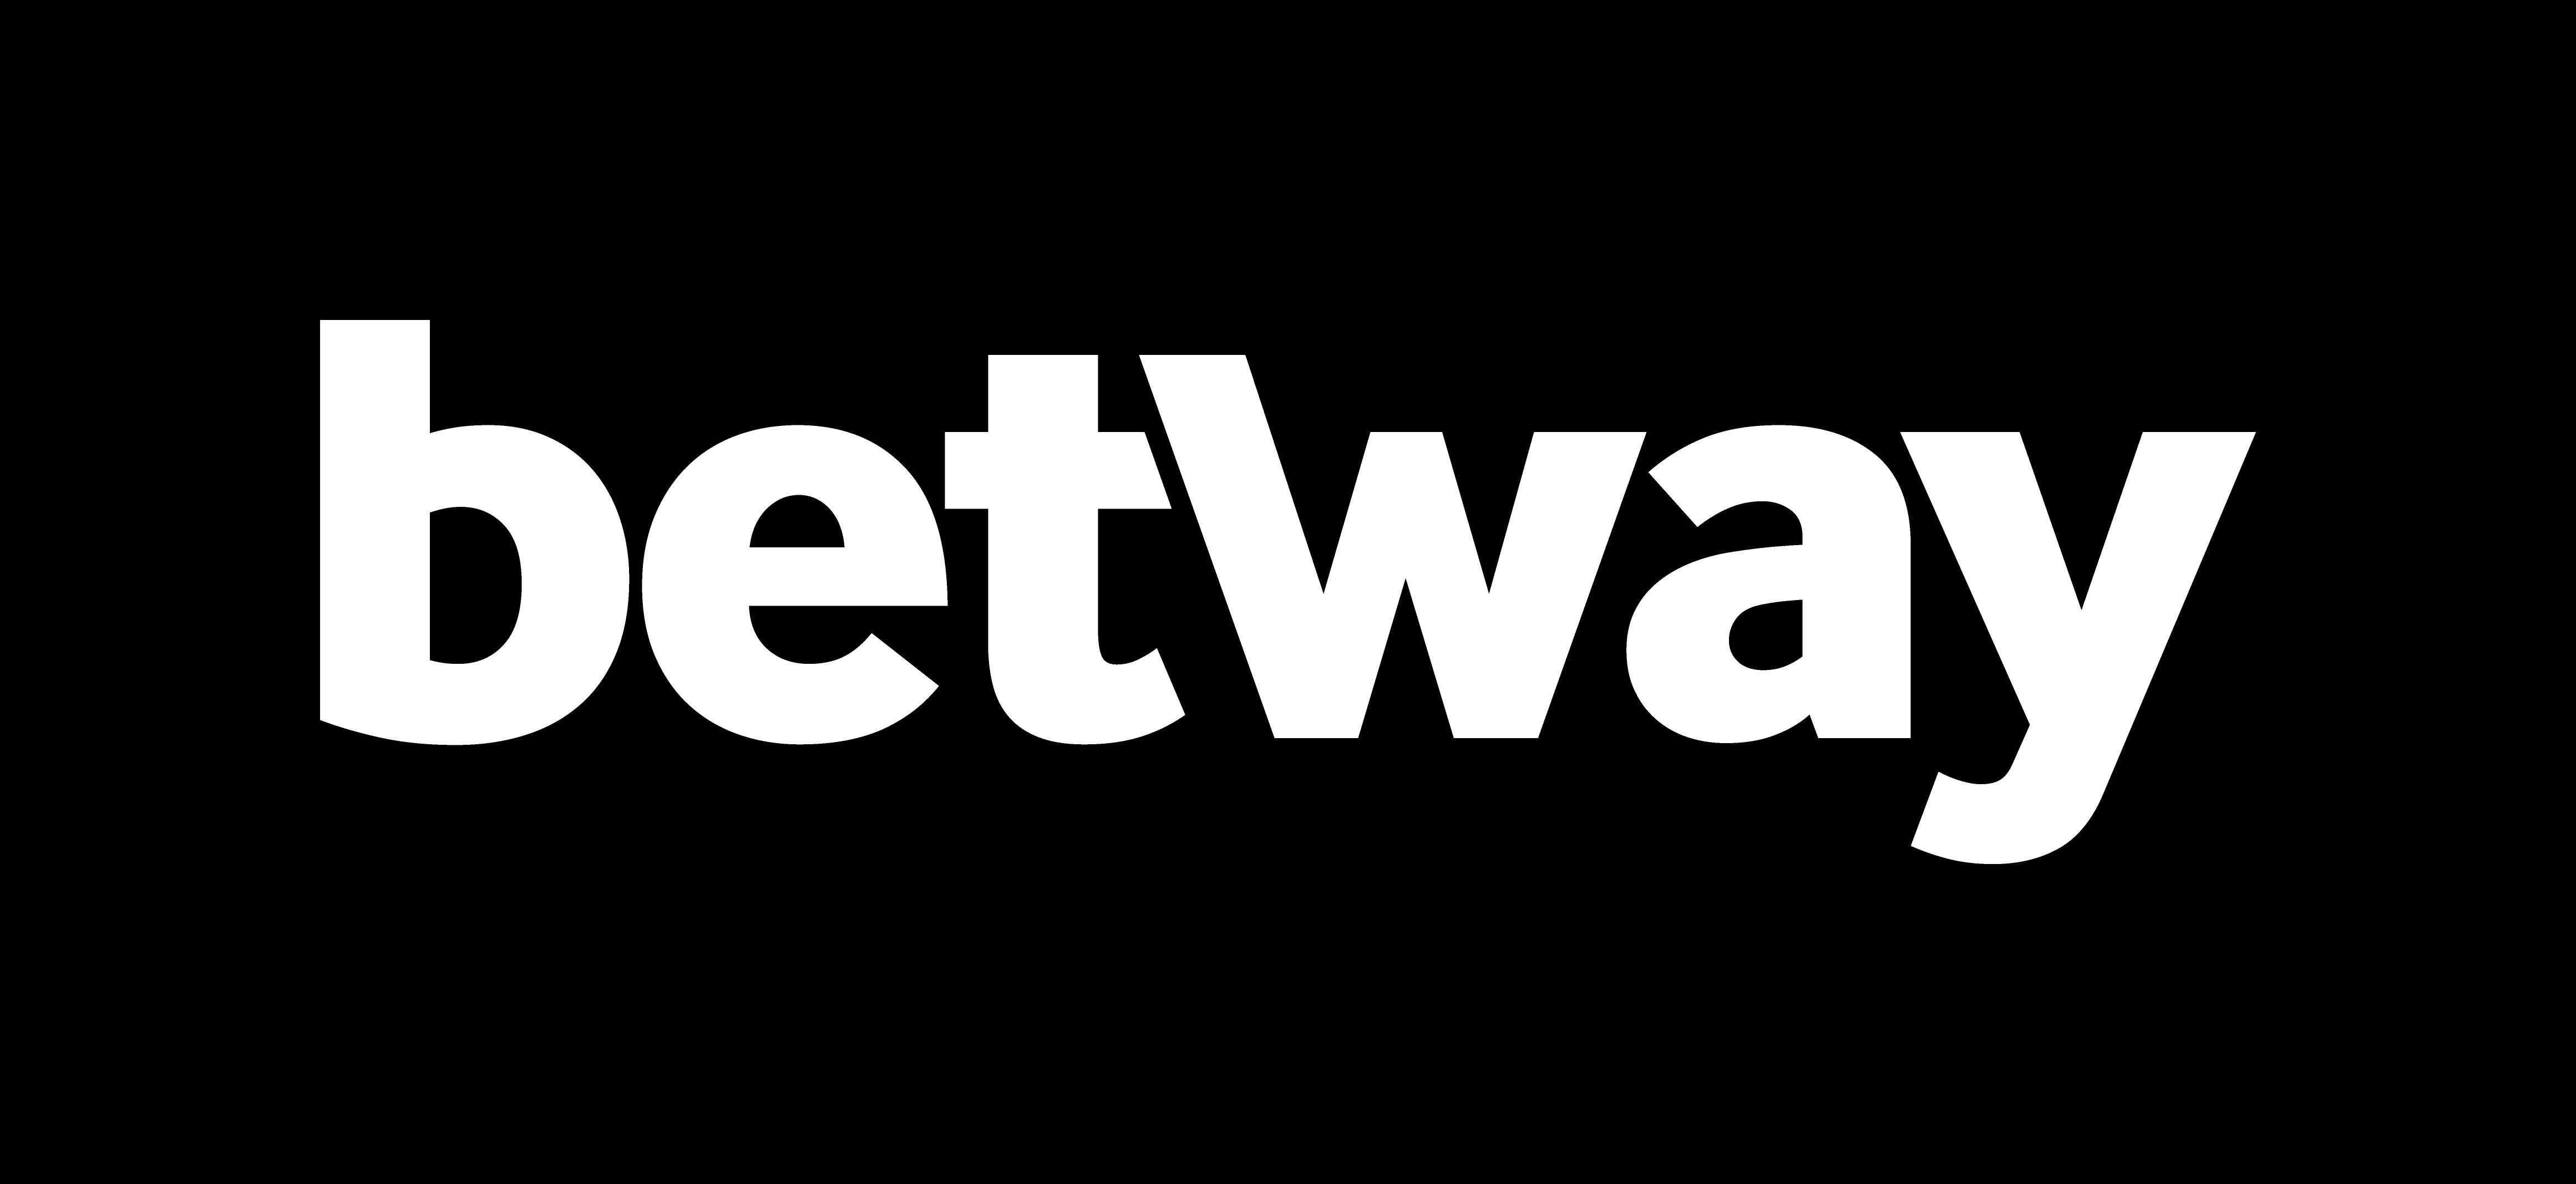 Image of Betway logo